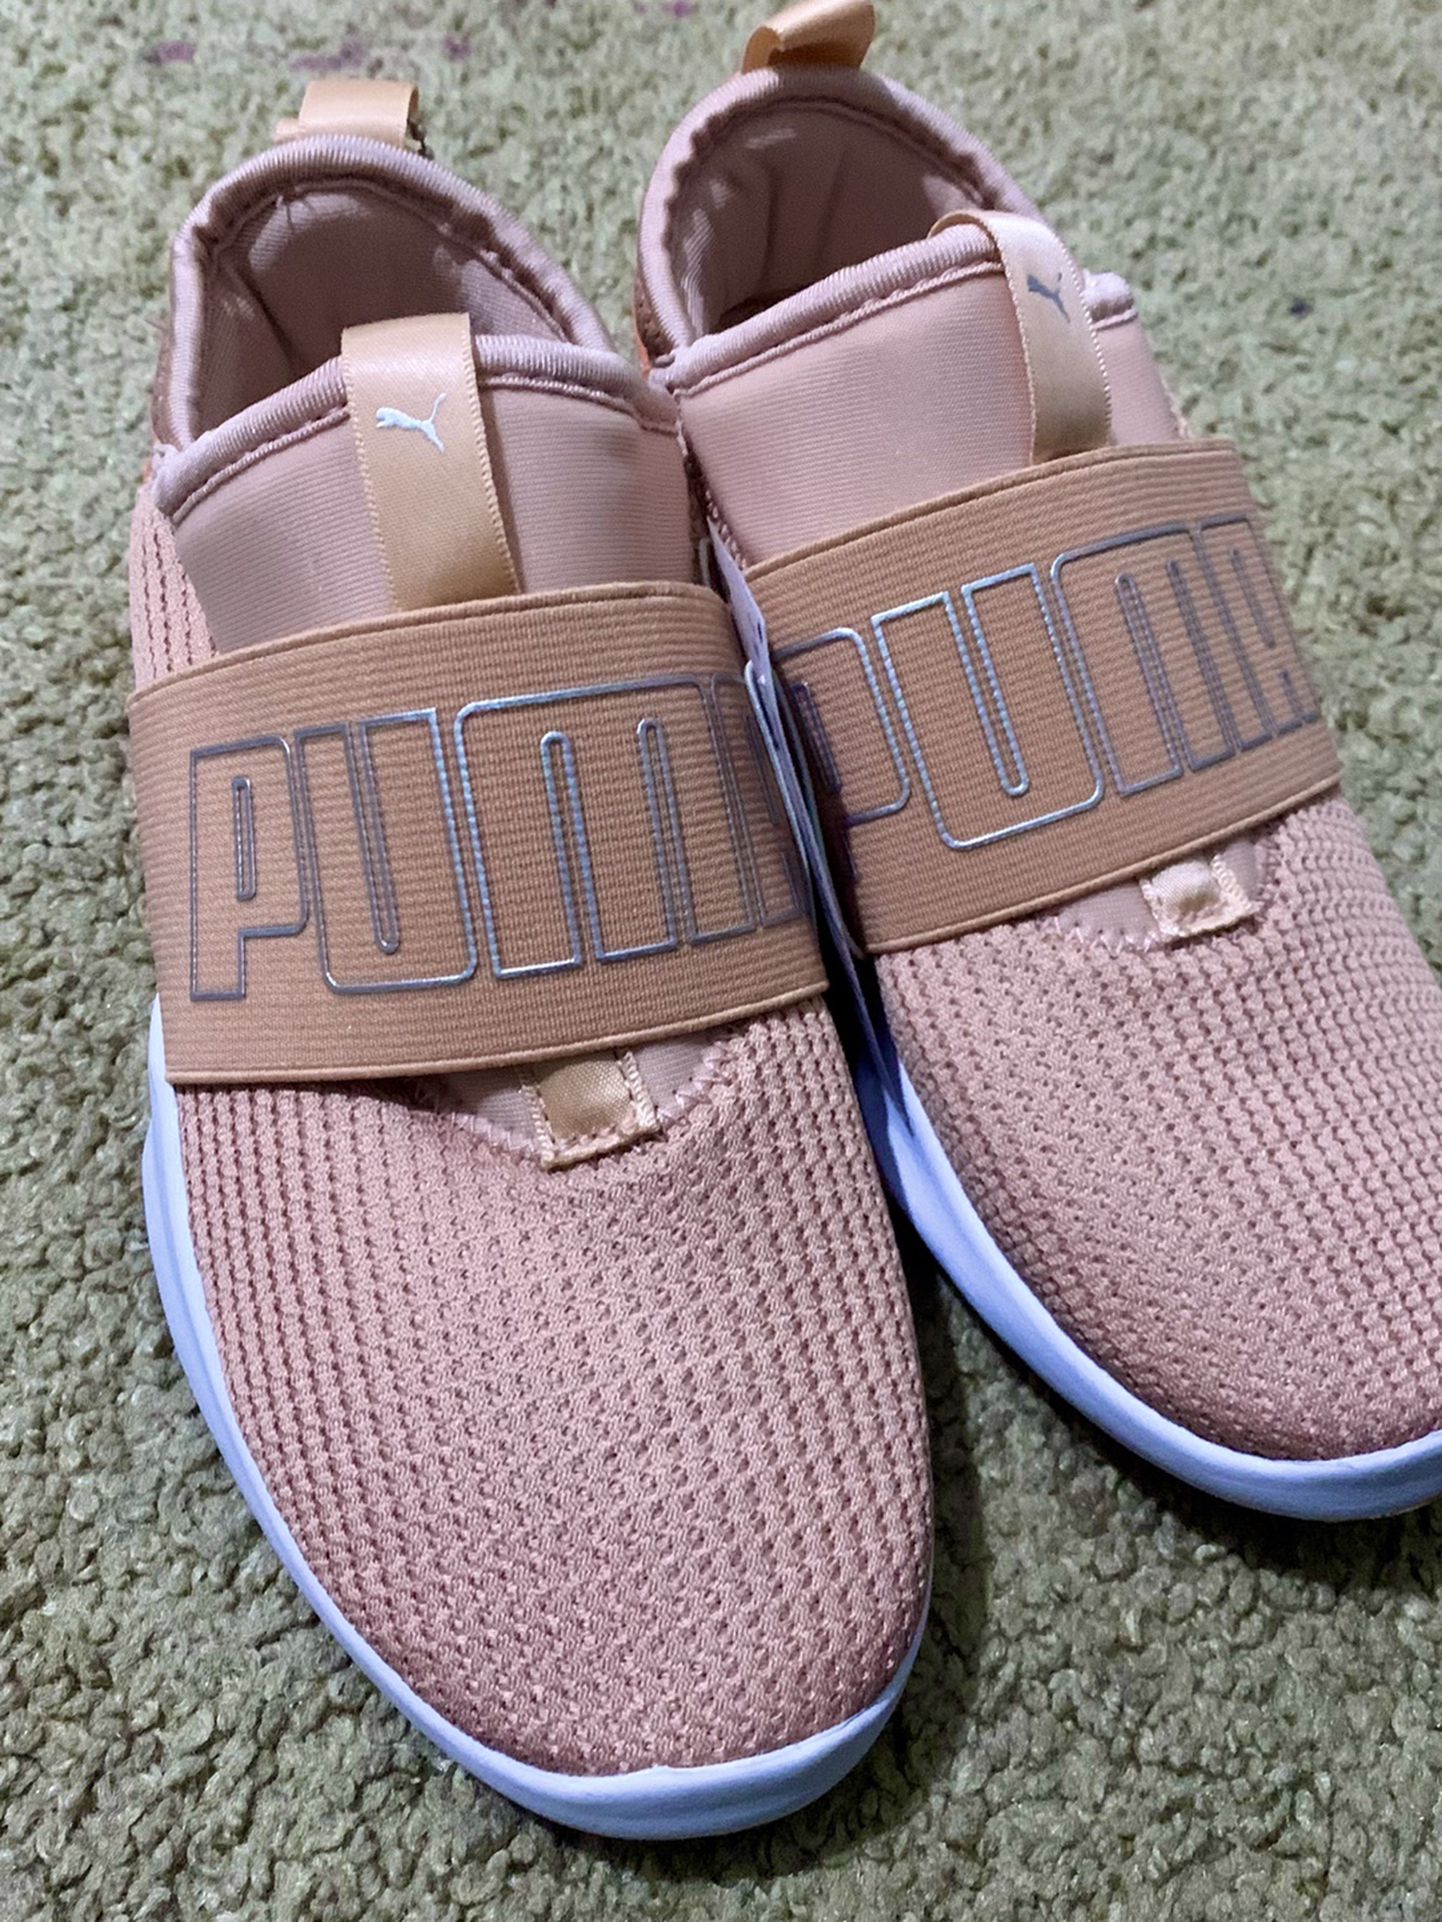 Girls Puma Sneakers Size 13c